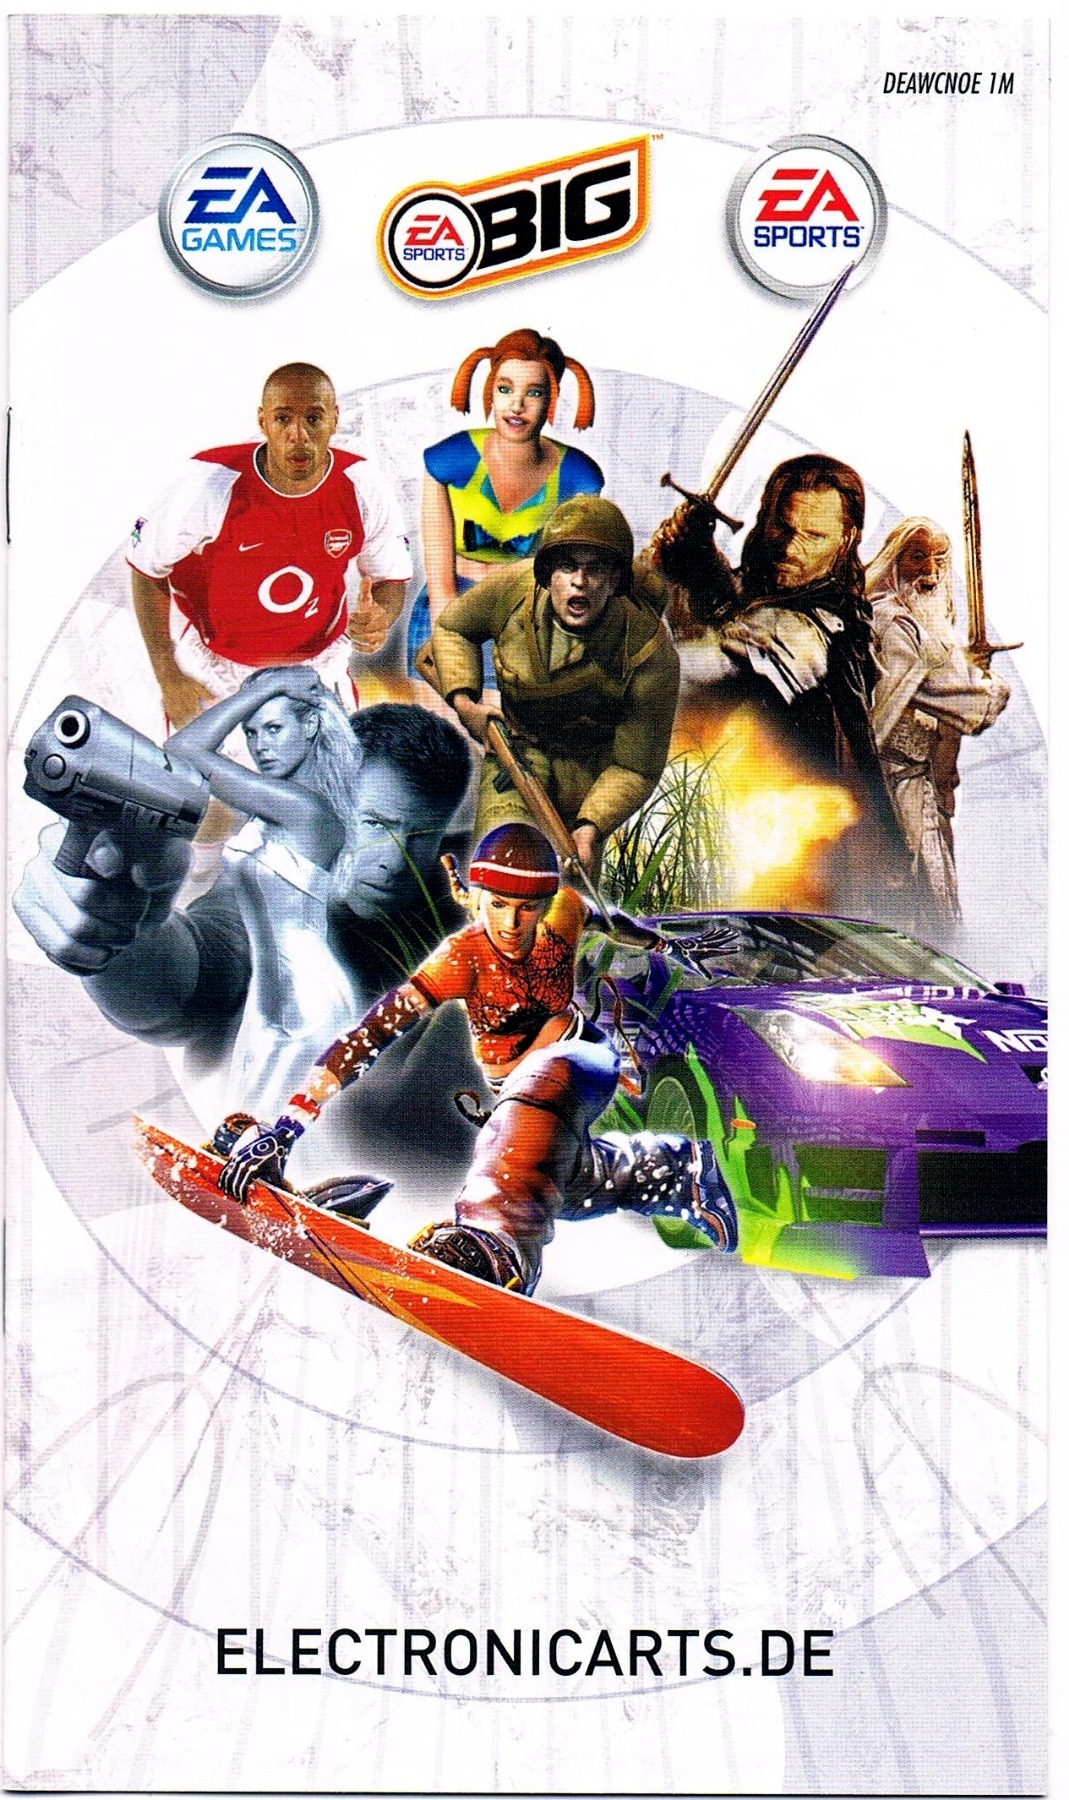 Nintendo GameCube - Electronic Arts advertising brochure